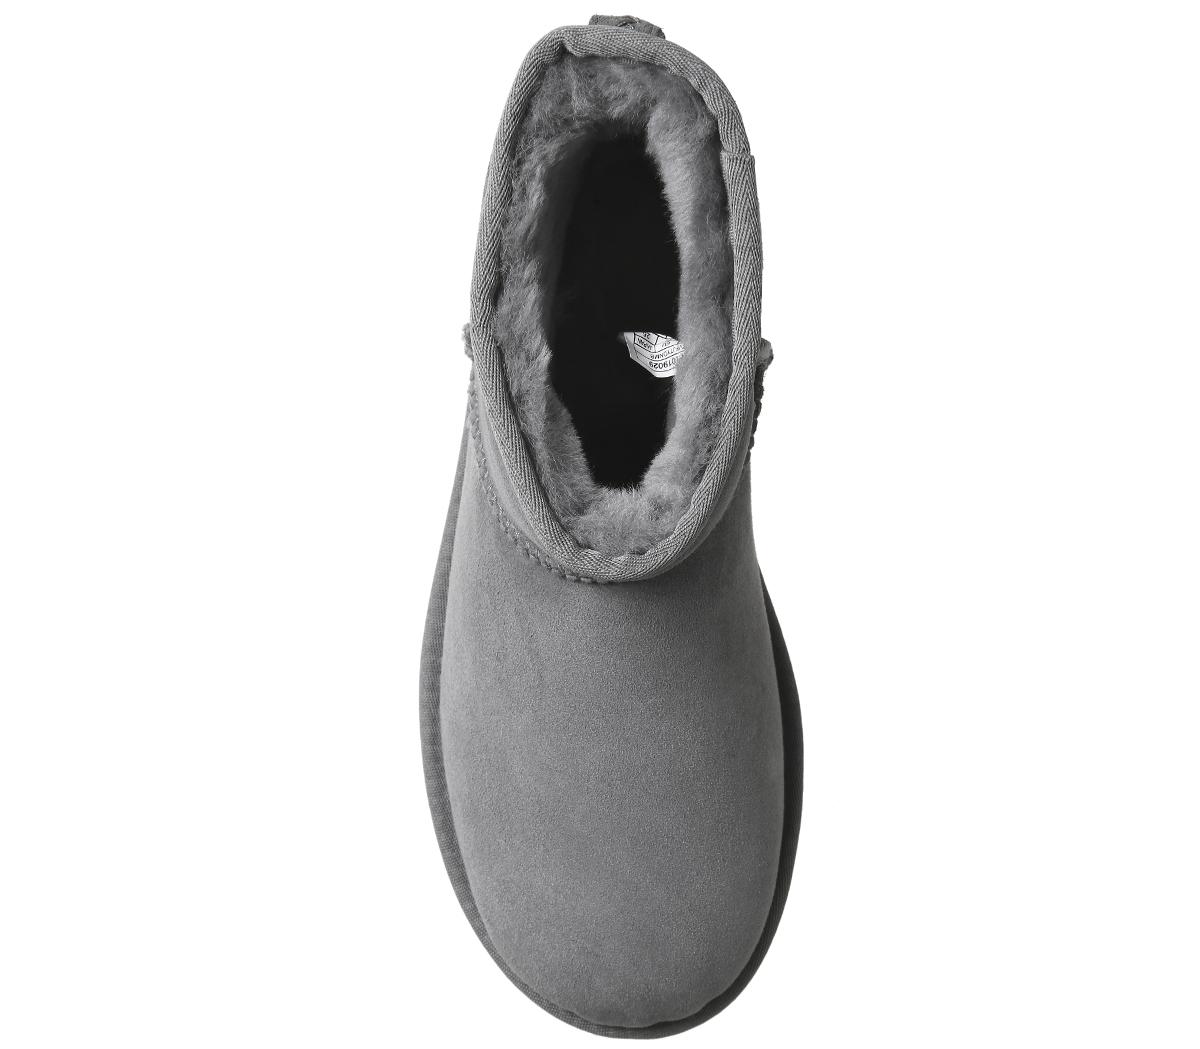 UGG Classic Mini Metallic II Exclusive Grey Suede Smu - Women's Ankle Boots